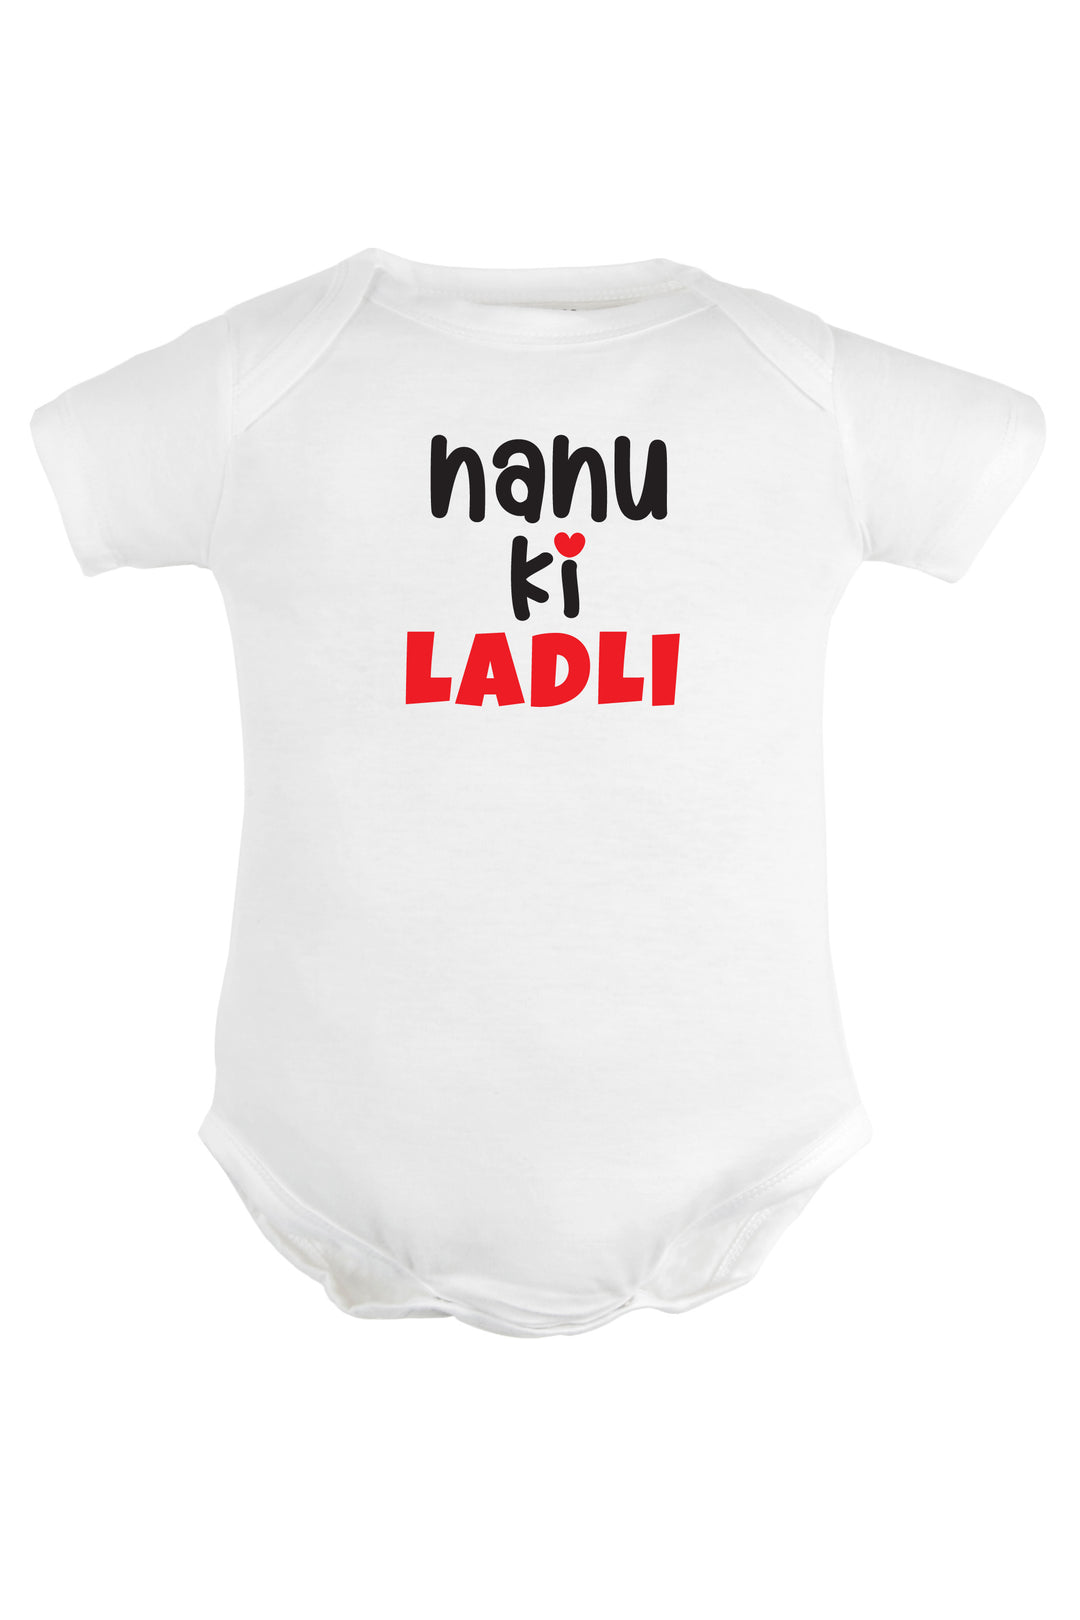 Nanu Ki Ladli Baby Romper | Onesies